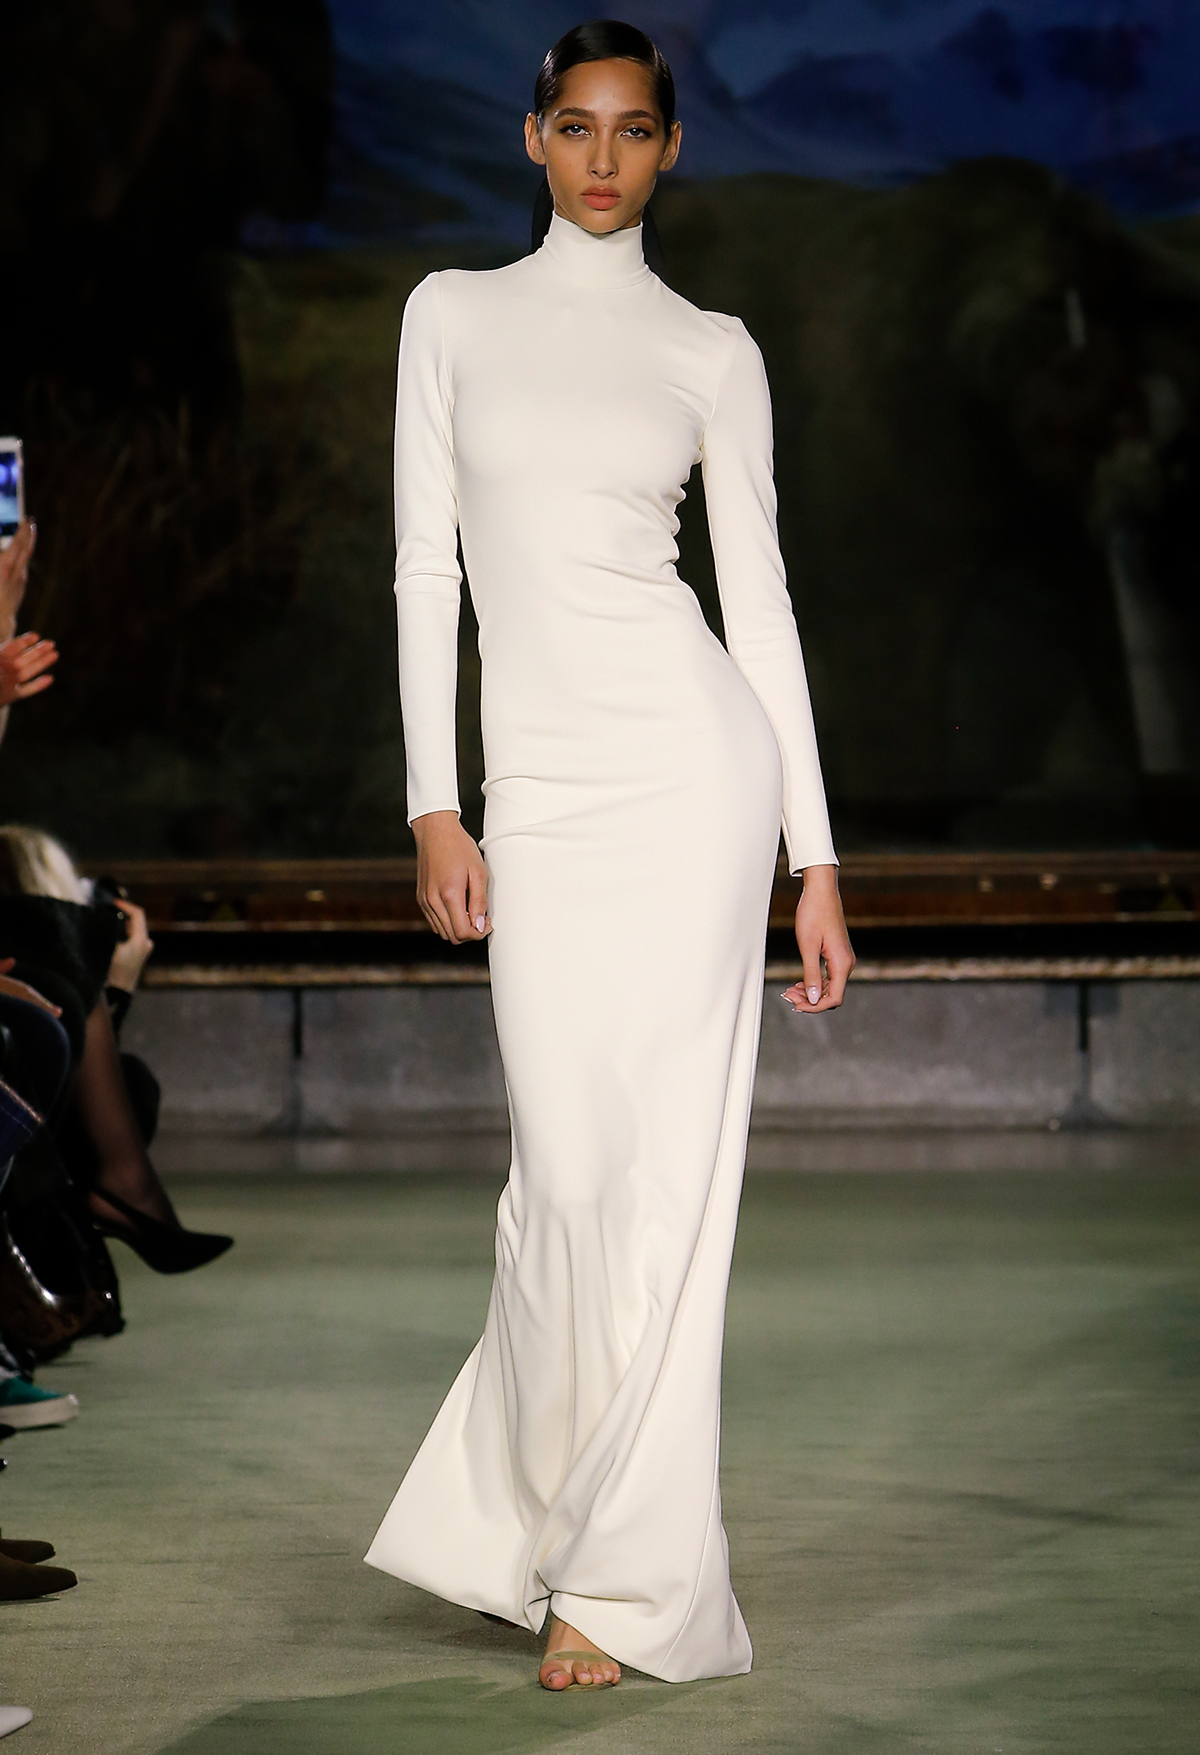 Autumn winter 2020 fashion trends: Bodycon white Brandon Maxwell dress